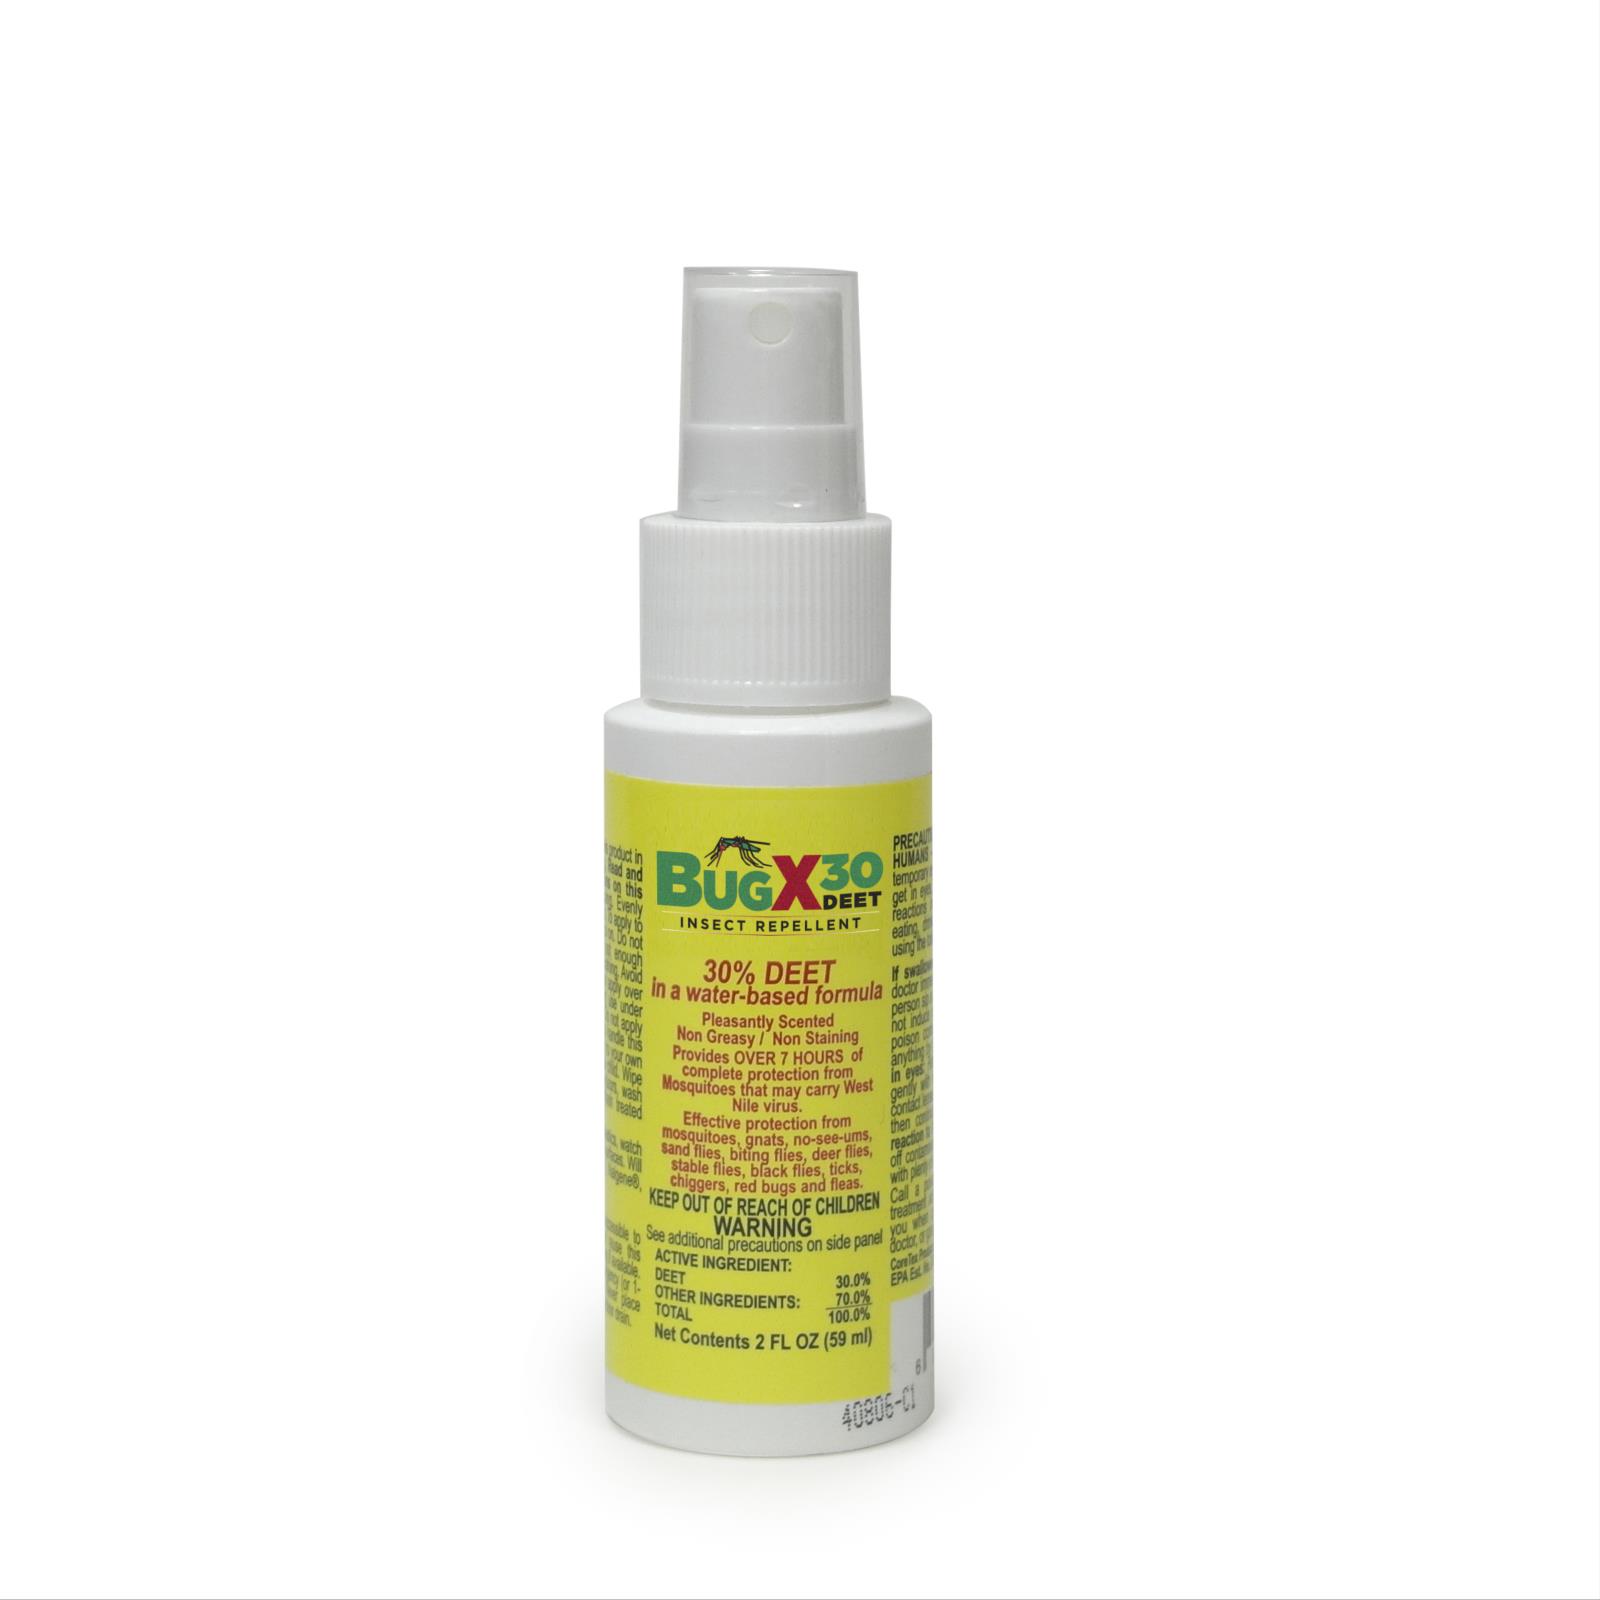 BugX® 30 DEET Insect Repellent